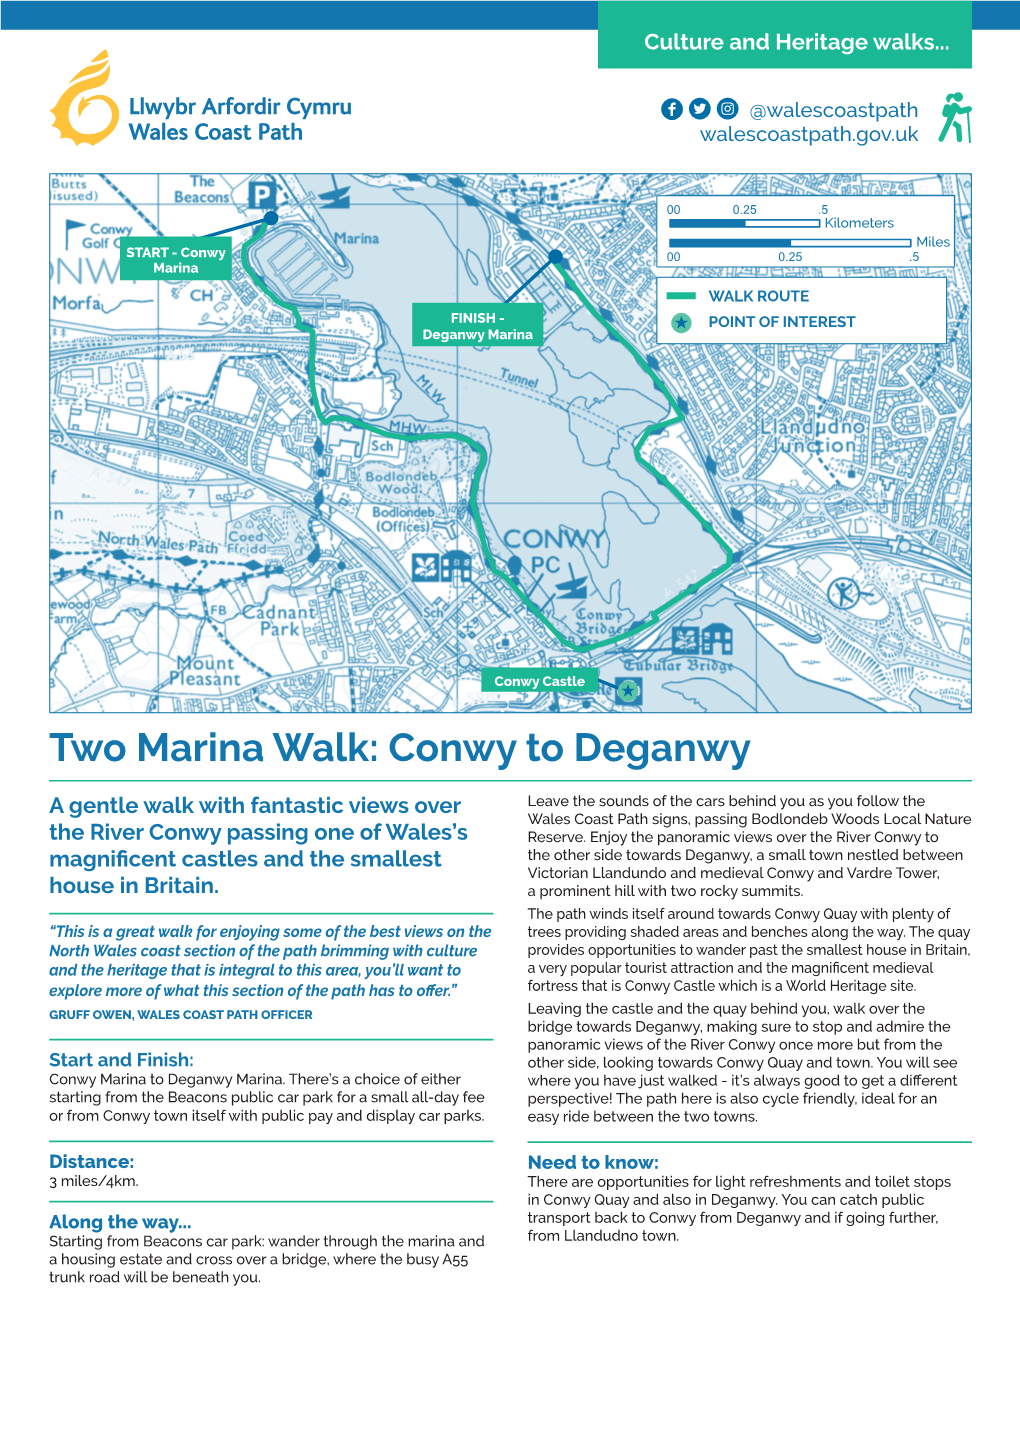 Two Marina Walk: Conwy to Deganwy